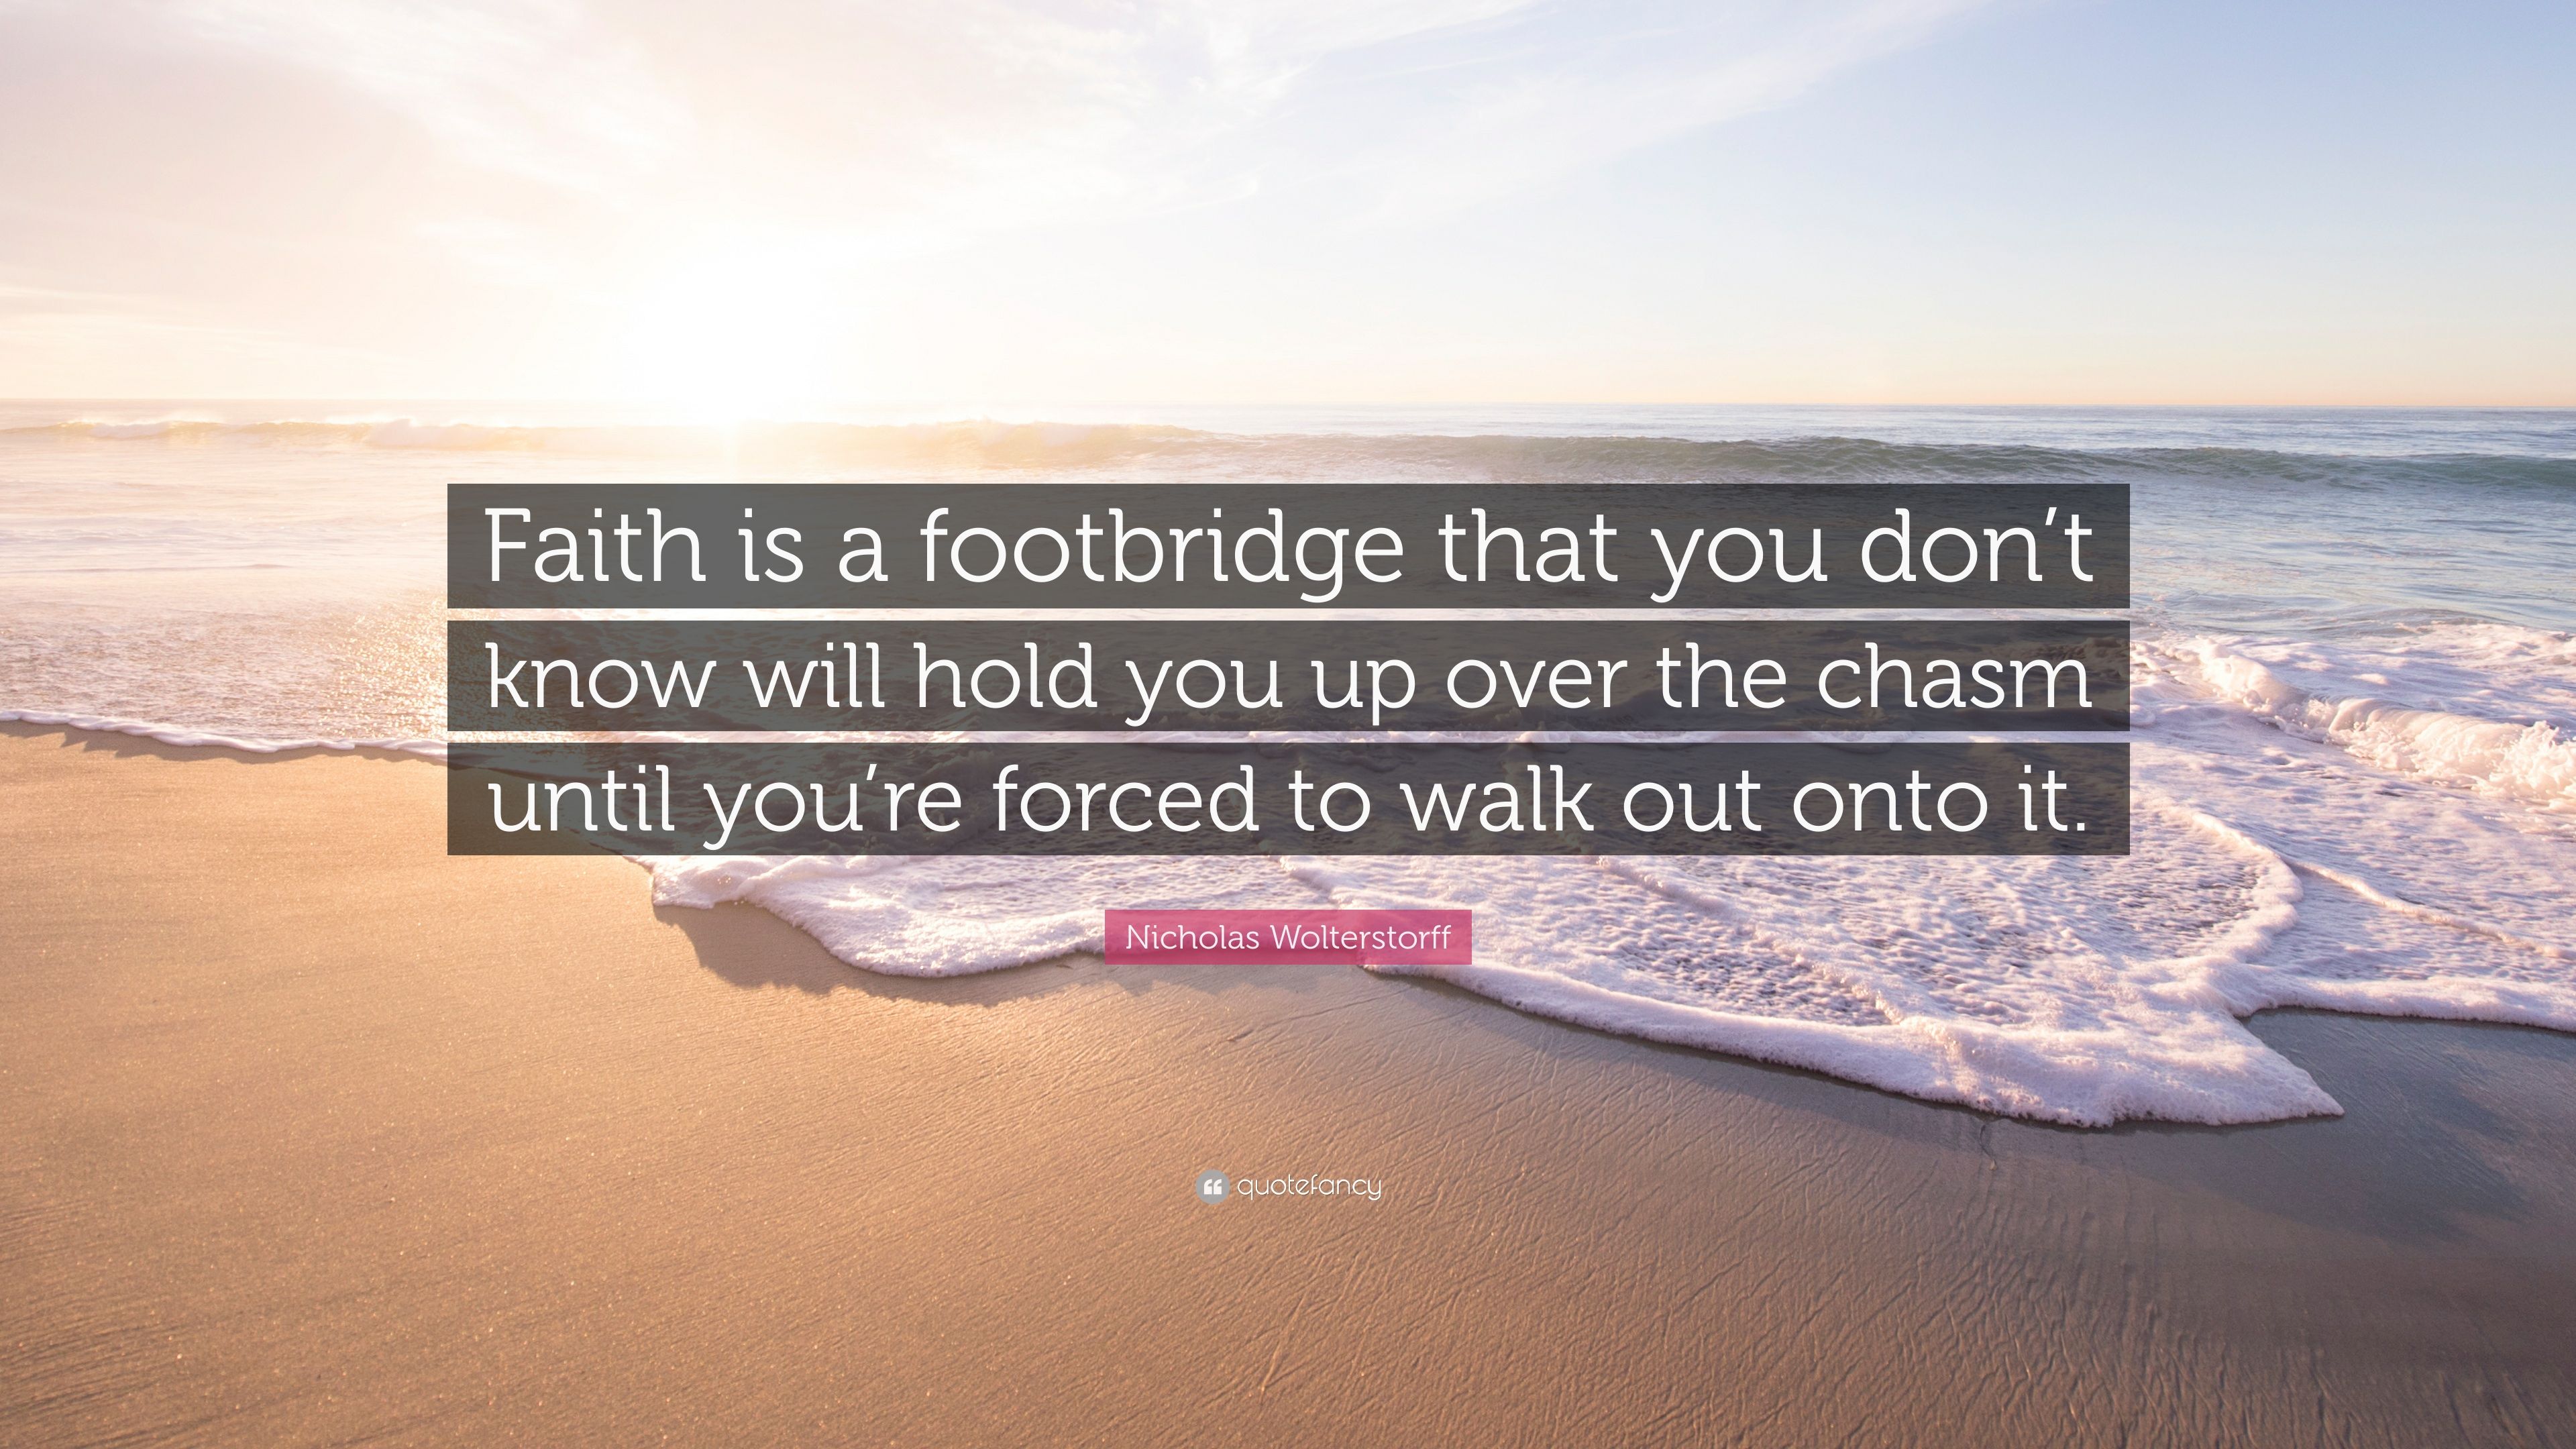 Nicholas Wolterstorff Quote: “Faith is a footbridge that you don't